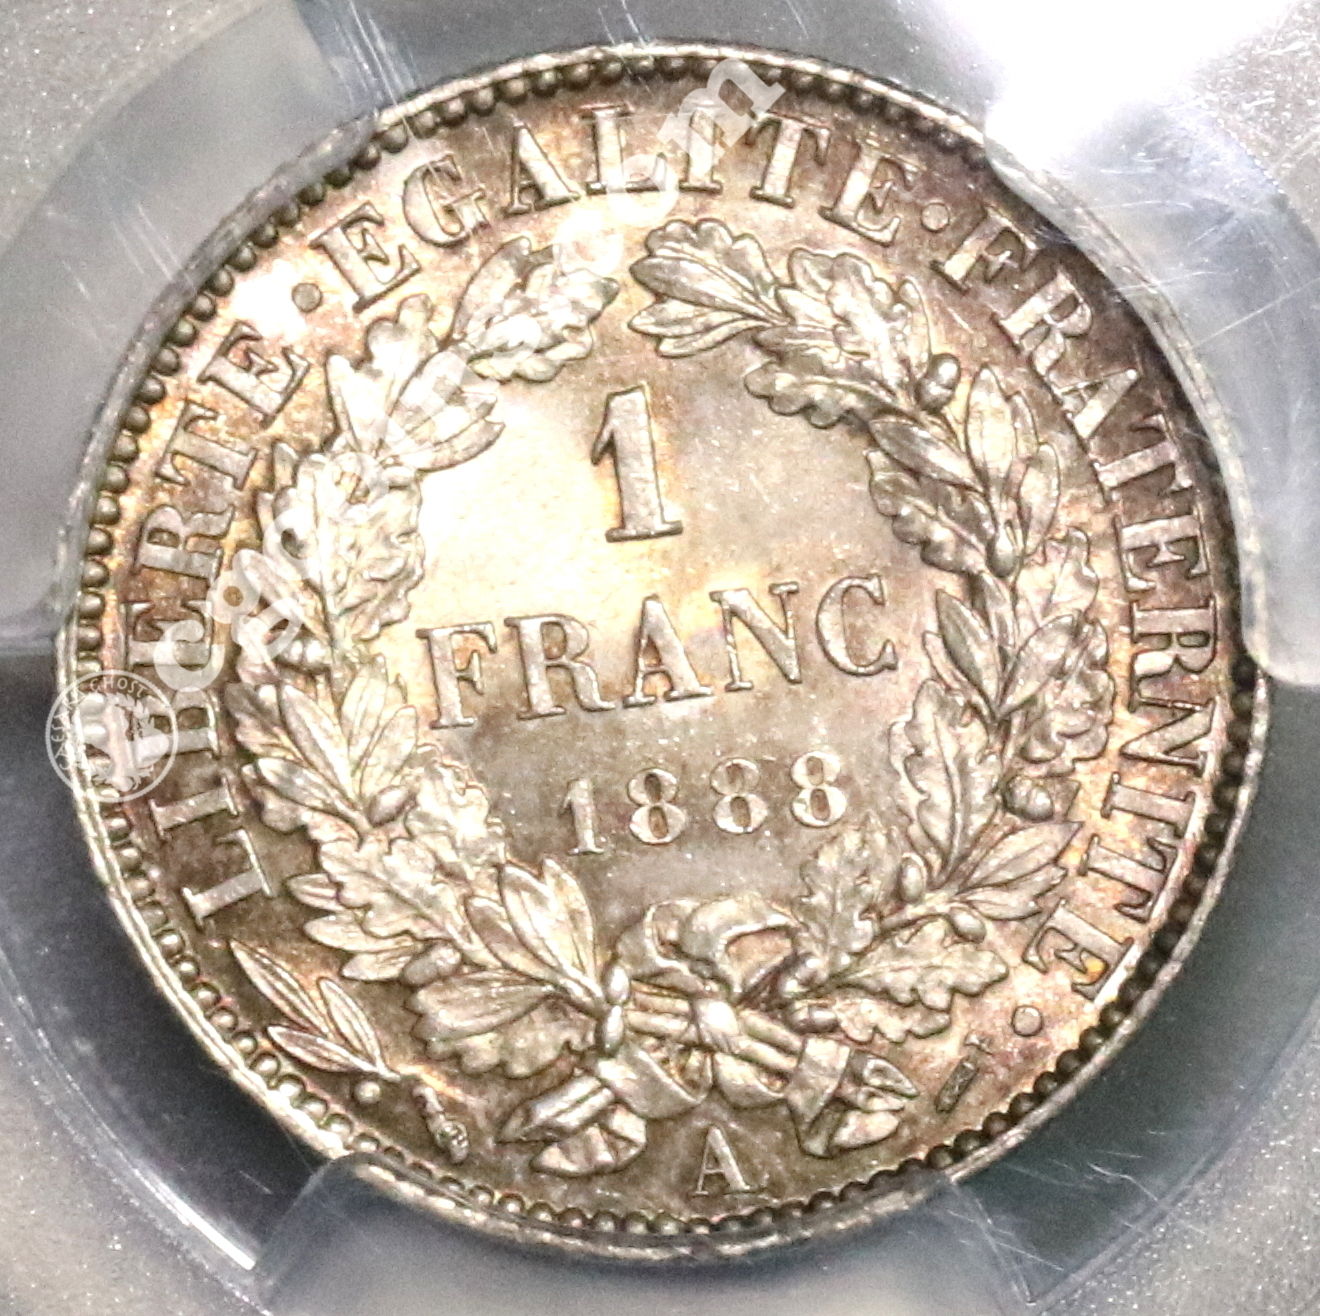 1888-A PCGS MS 65 France Silver 1 Franc GEM BU Ceres Coin (16090701D)